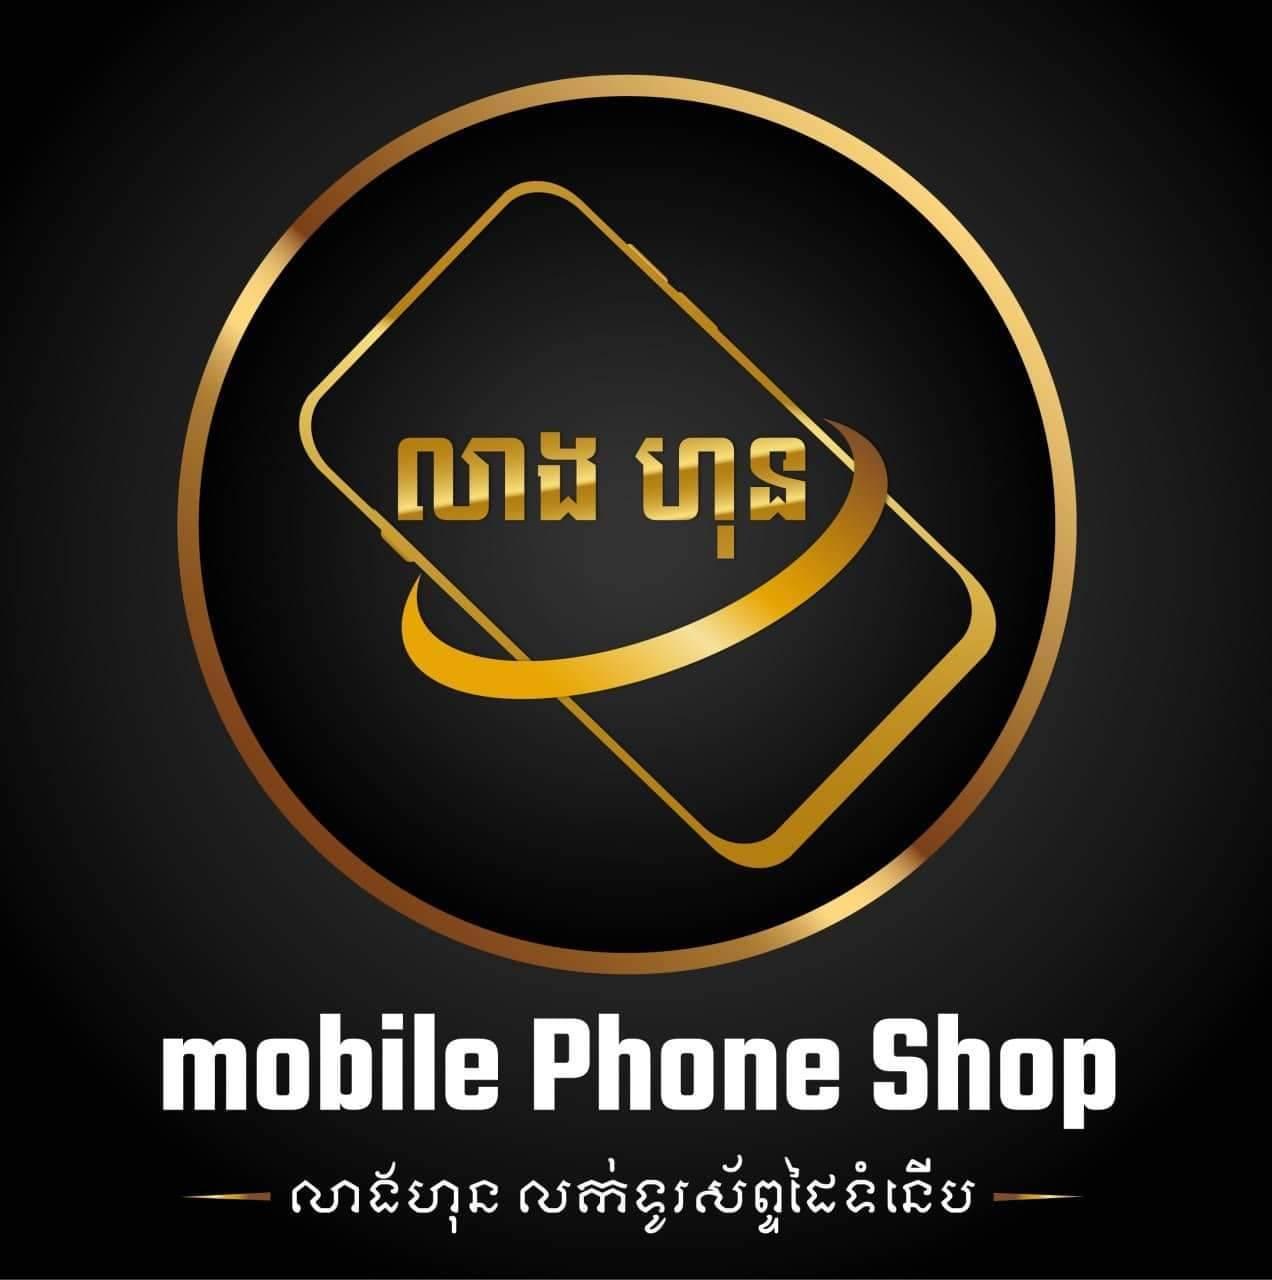 Leang Hon Phone Shop